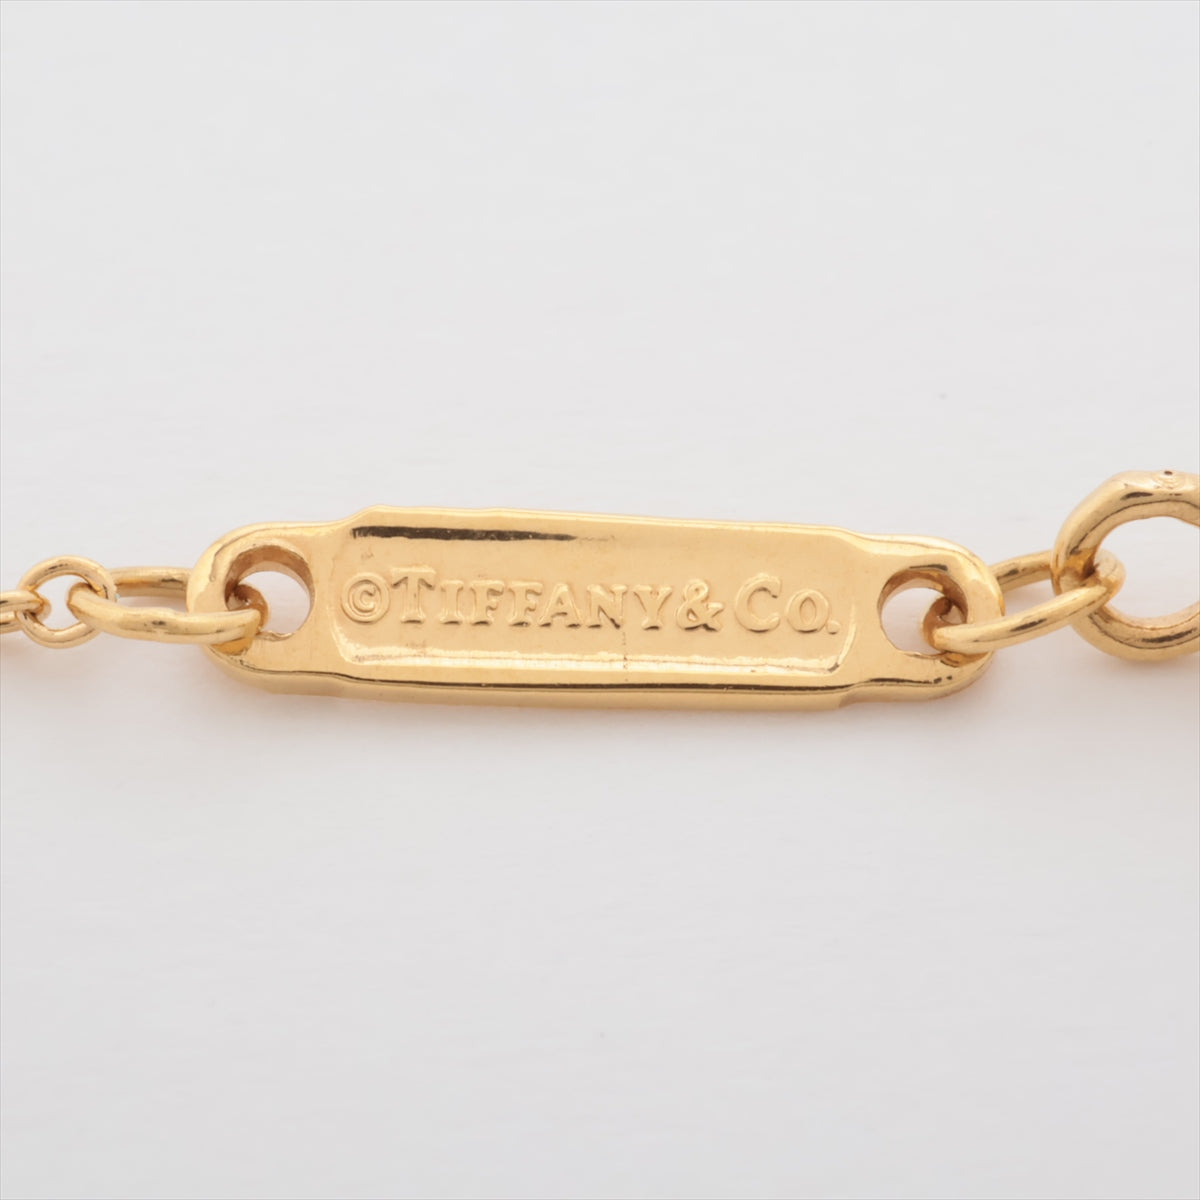 Tiffany T Smile  Diamond Necklace 750 (YG) 3.1g